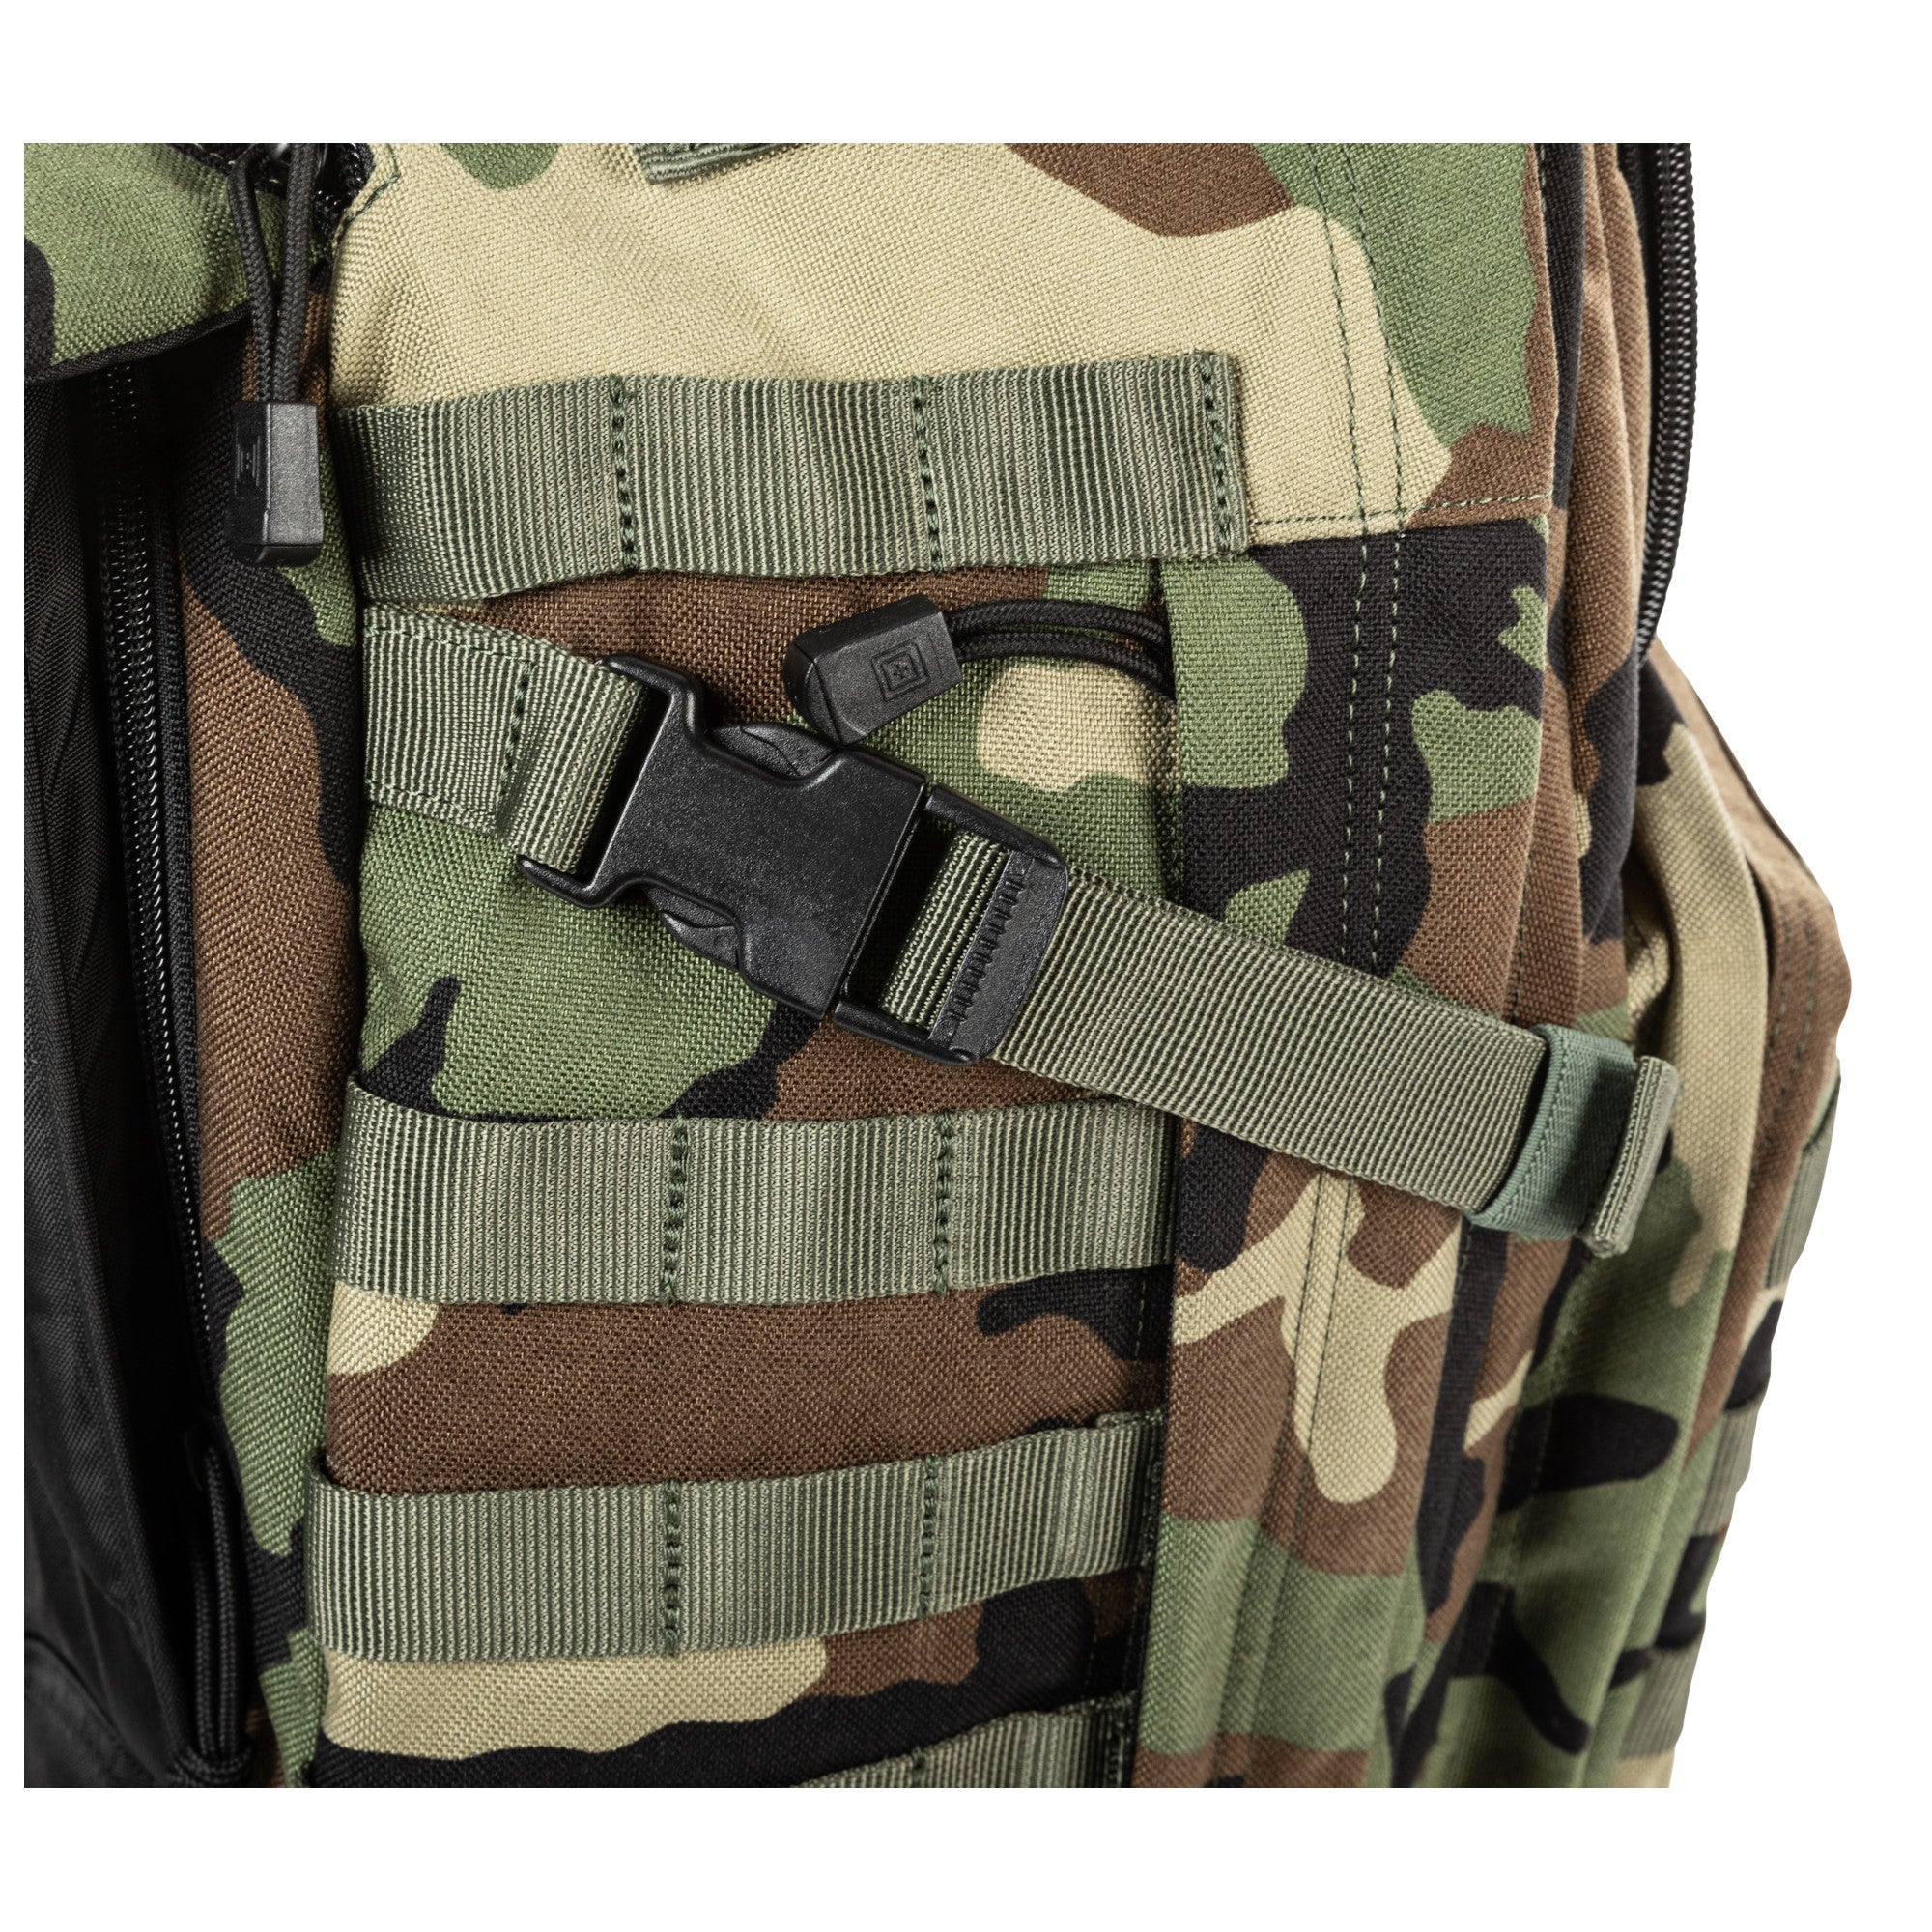 5.11 Tactical RUSH 24 2.0 Backpack 37L Woodland Camo Tactical Gear Australia Supplier Distributor Dealer